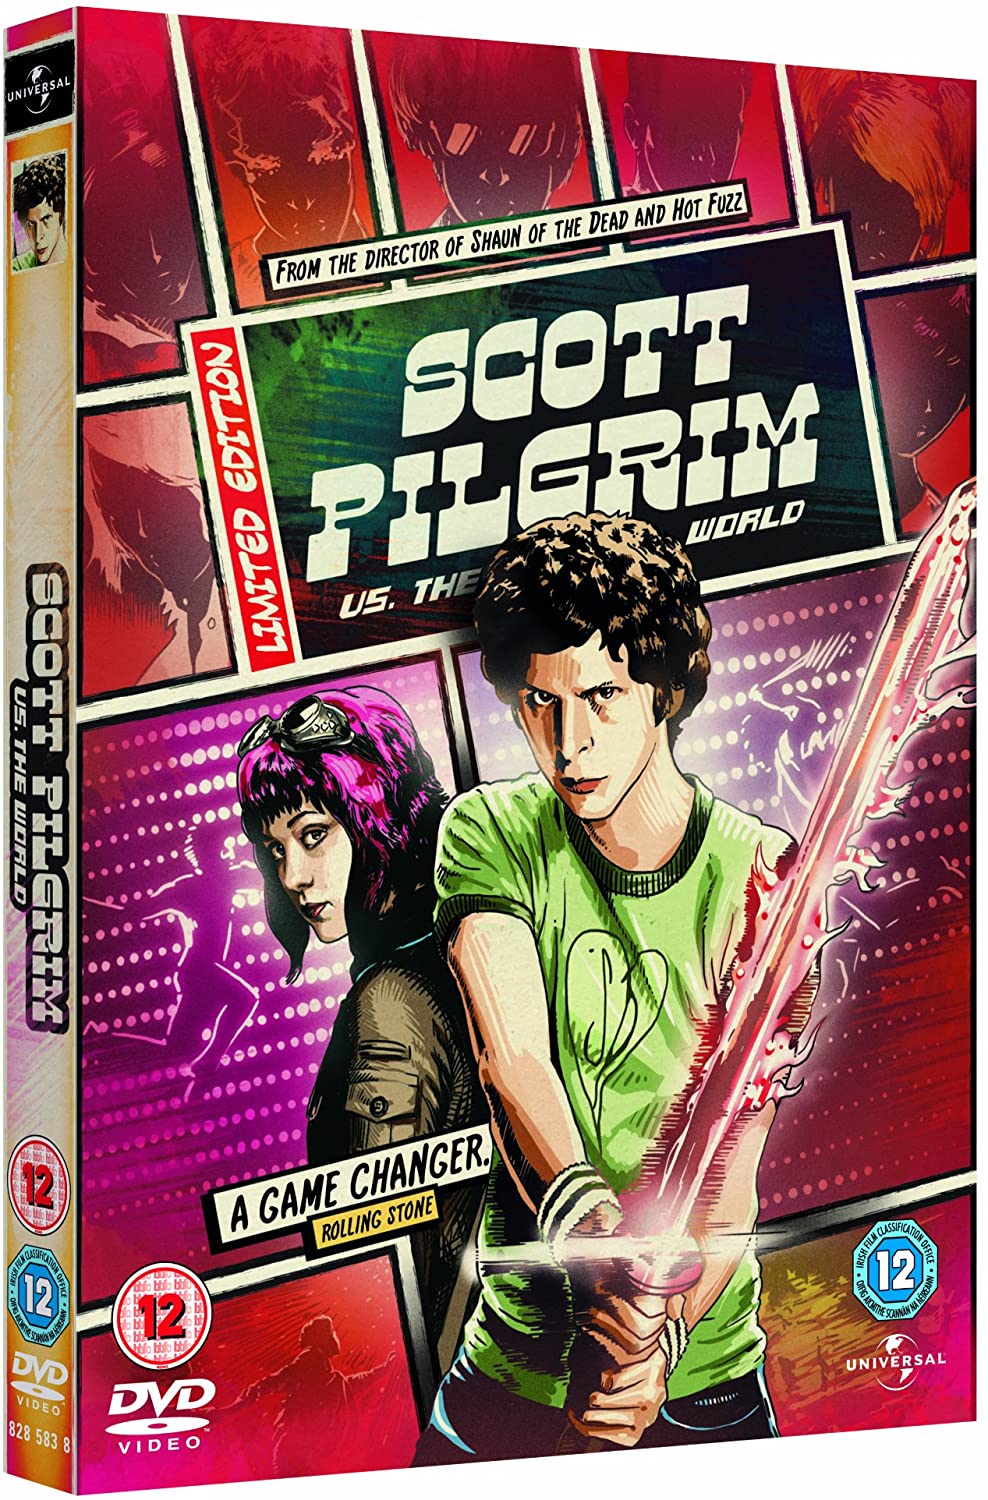 Reel Heroes: Scott Pilgrim - Action/Romance [DVD]